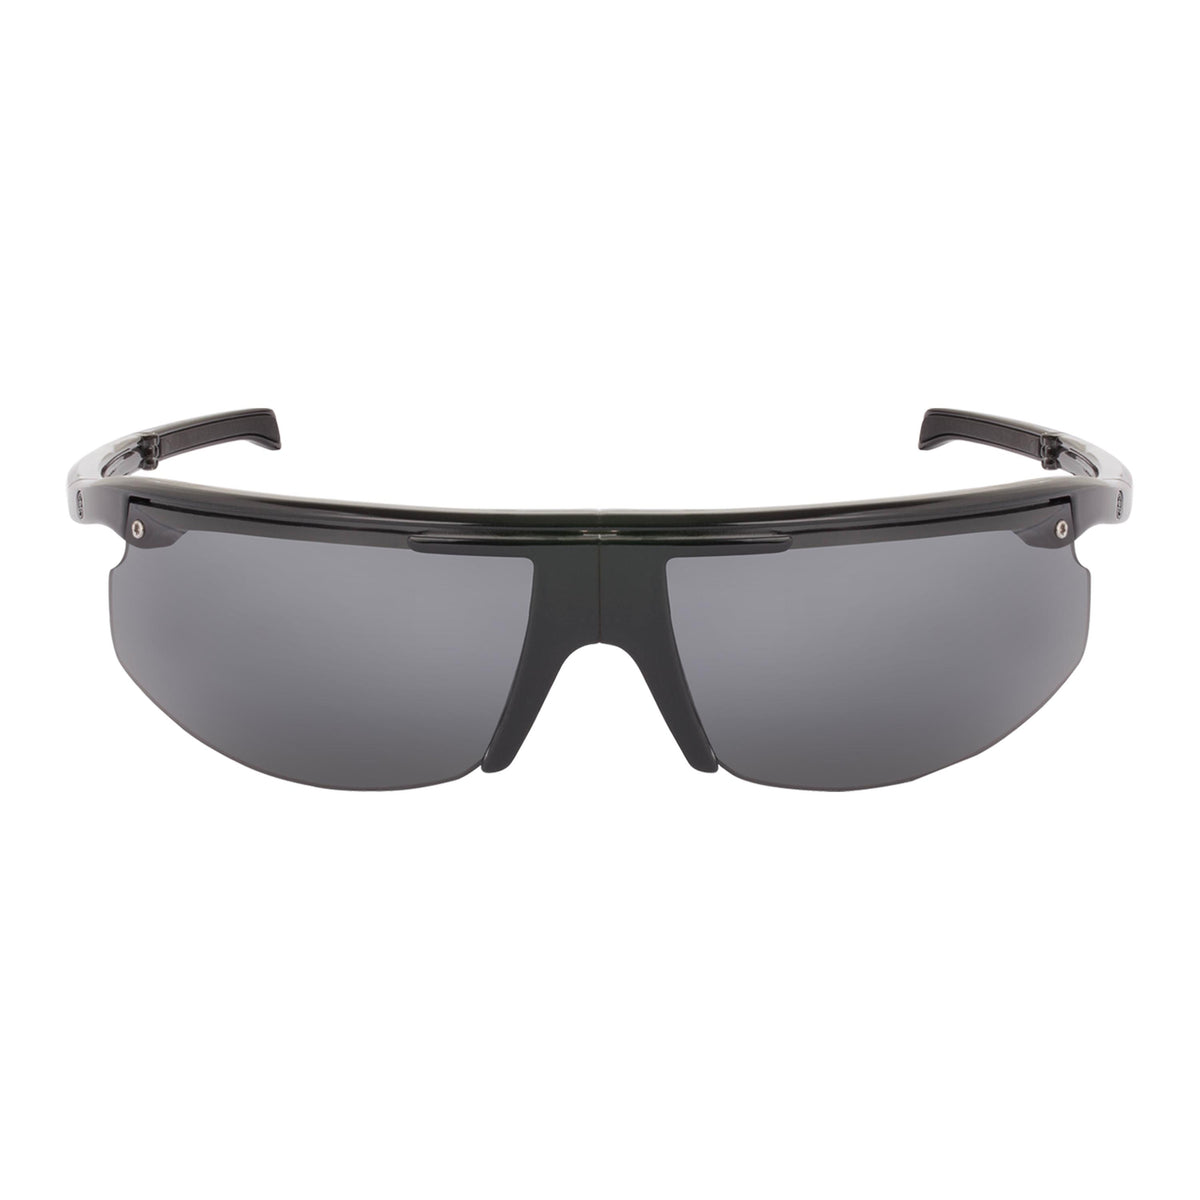 Popticals, Premium Compact Sunglasses, PopStar, 040041-BLGP, Polarized Sunglasses, Gloss Black Crystal Frame, Gray Lenses, Front View